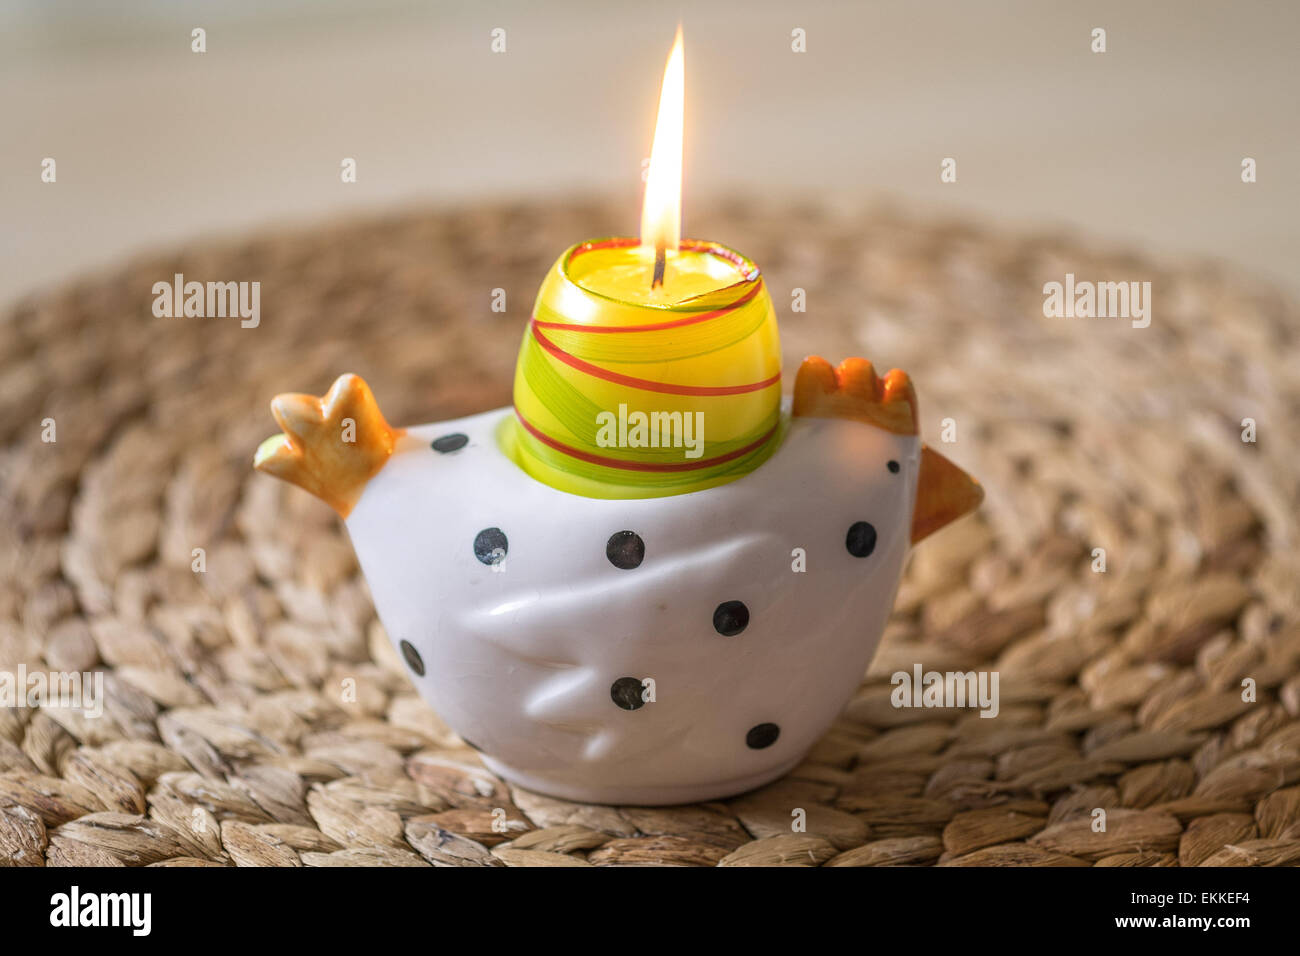 Candelabro de Pascua en forma de pollo con velas encendidas Foto de stock